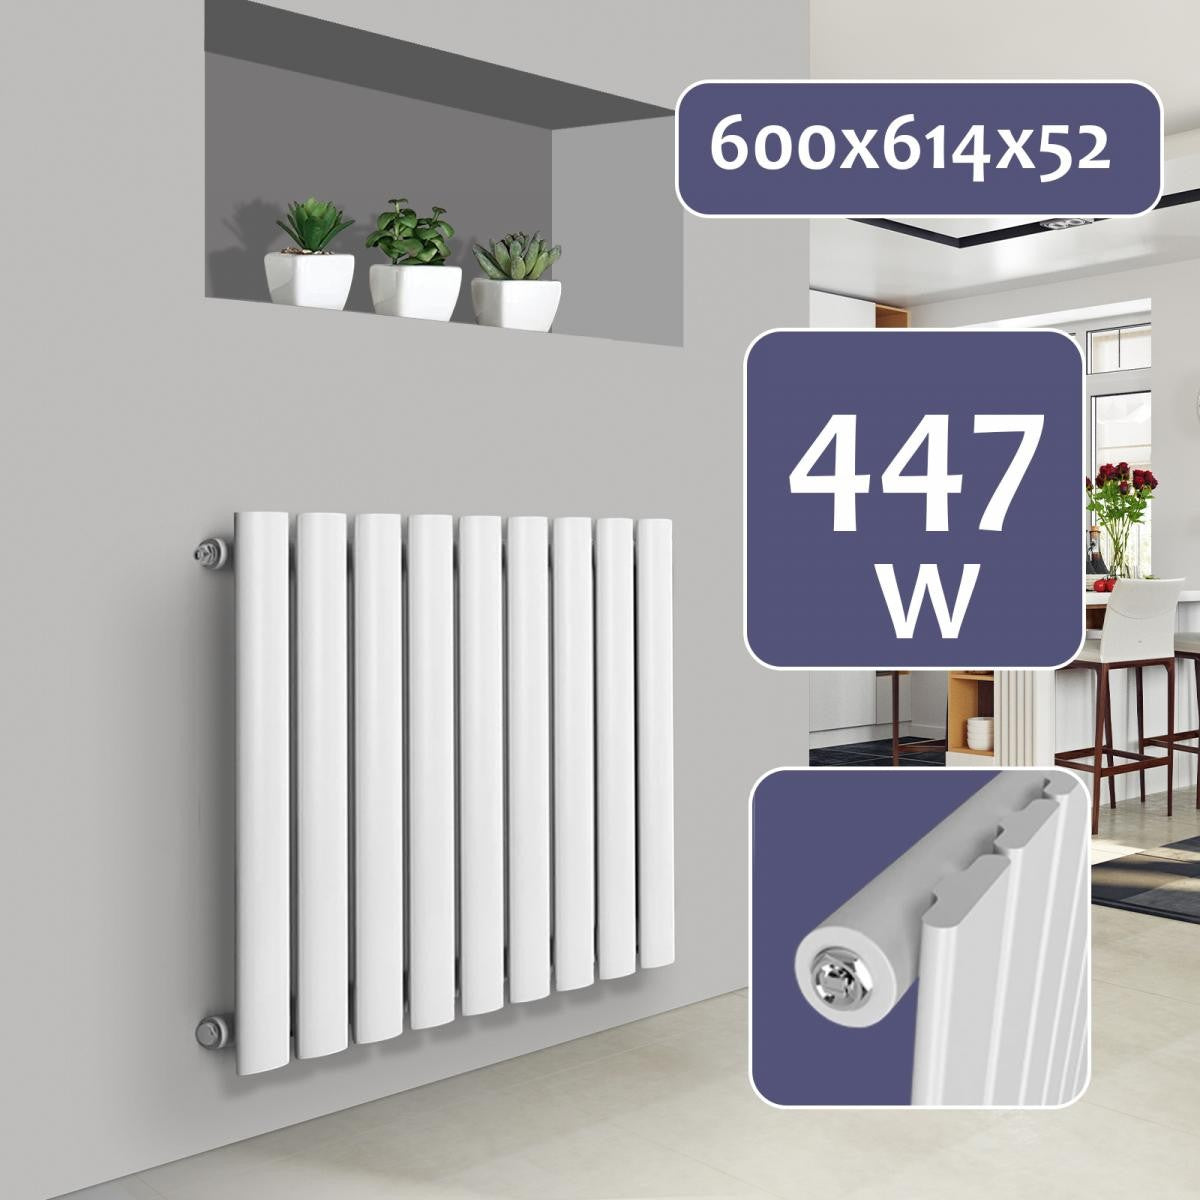 14: AquamarineÂ® radiator - vandret, enkeltlag, 9 segmenter, 600x614x52 mm, centralvarme, hvid